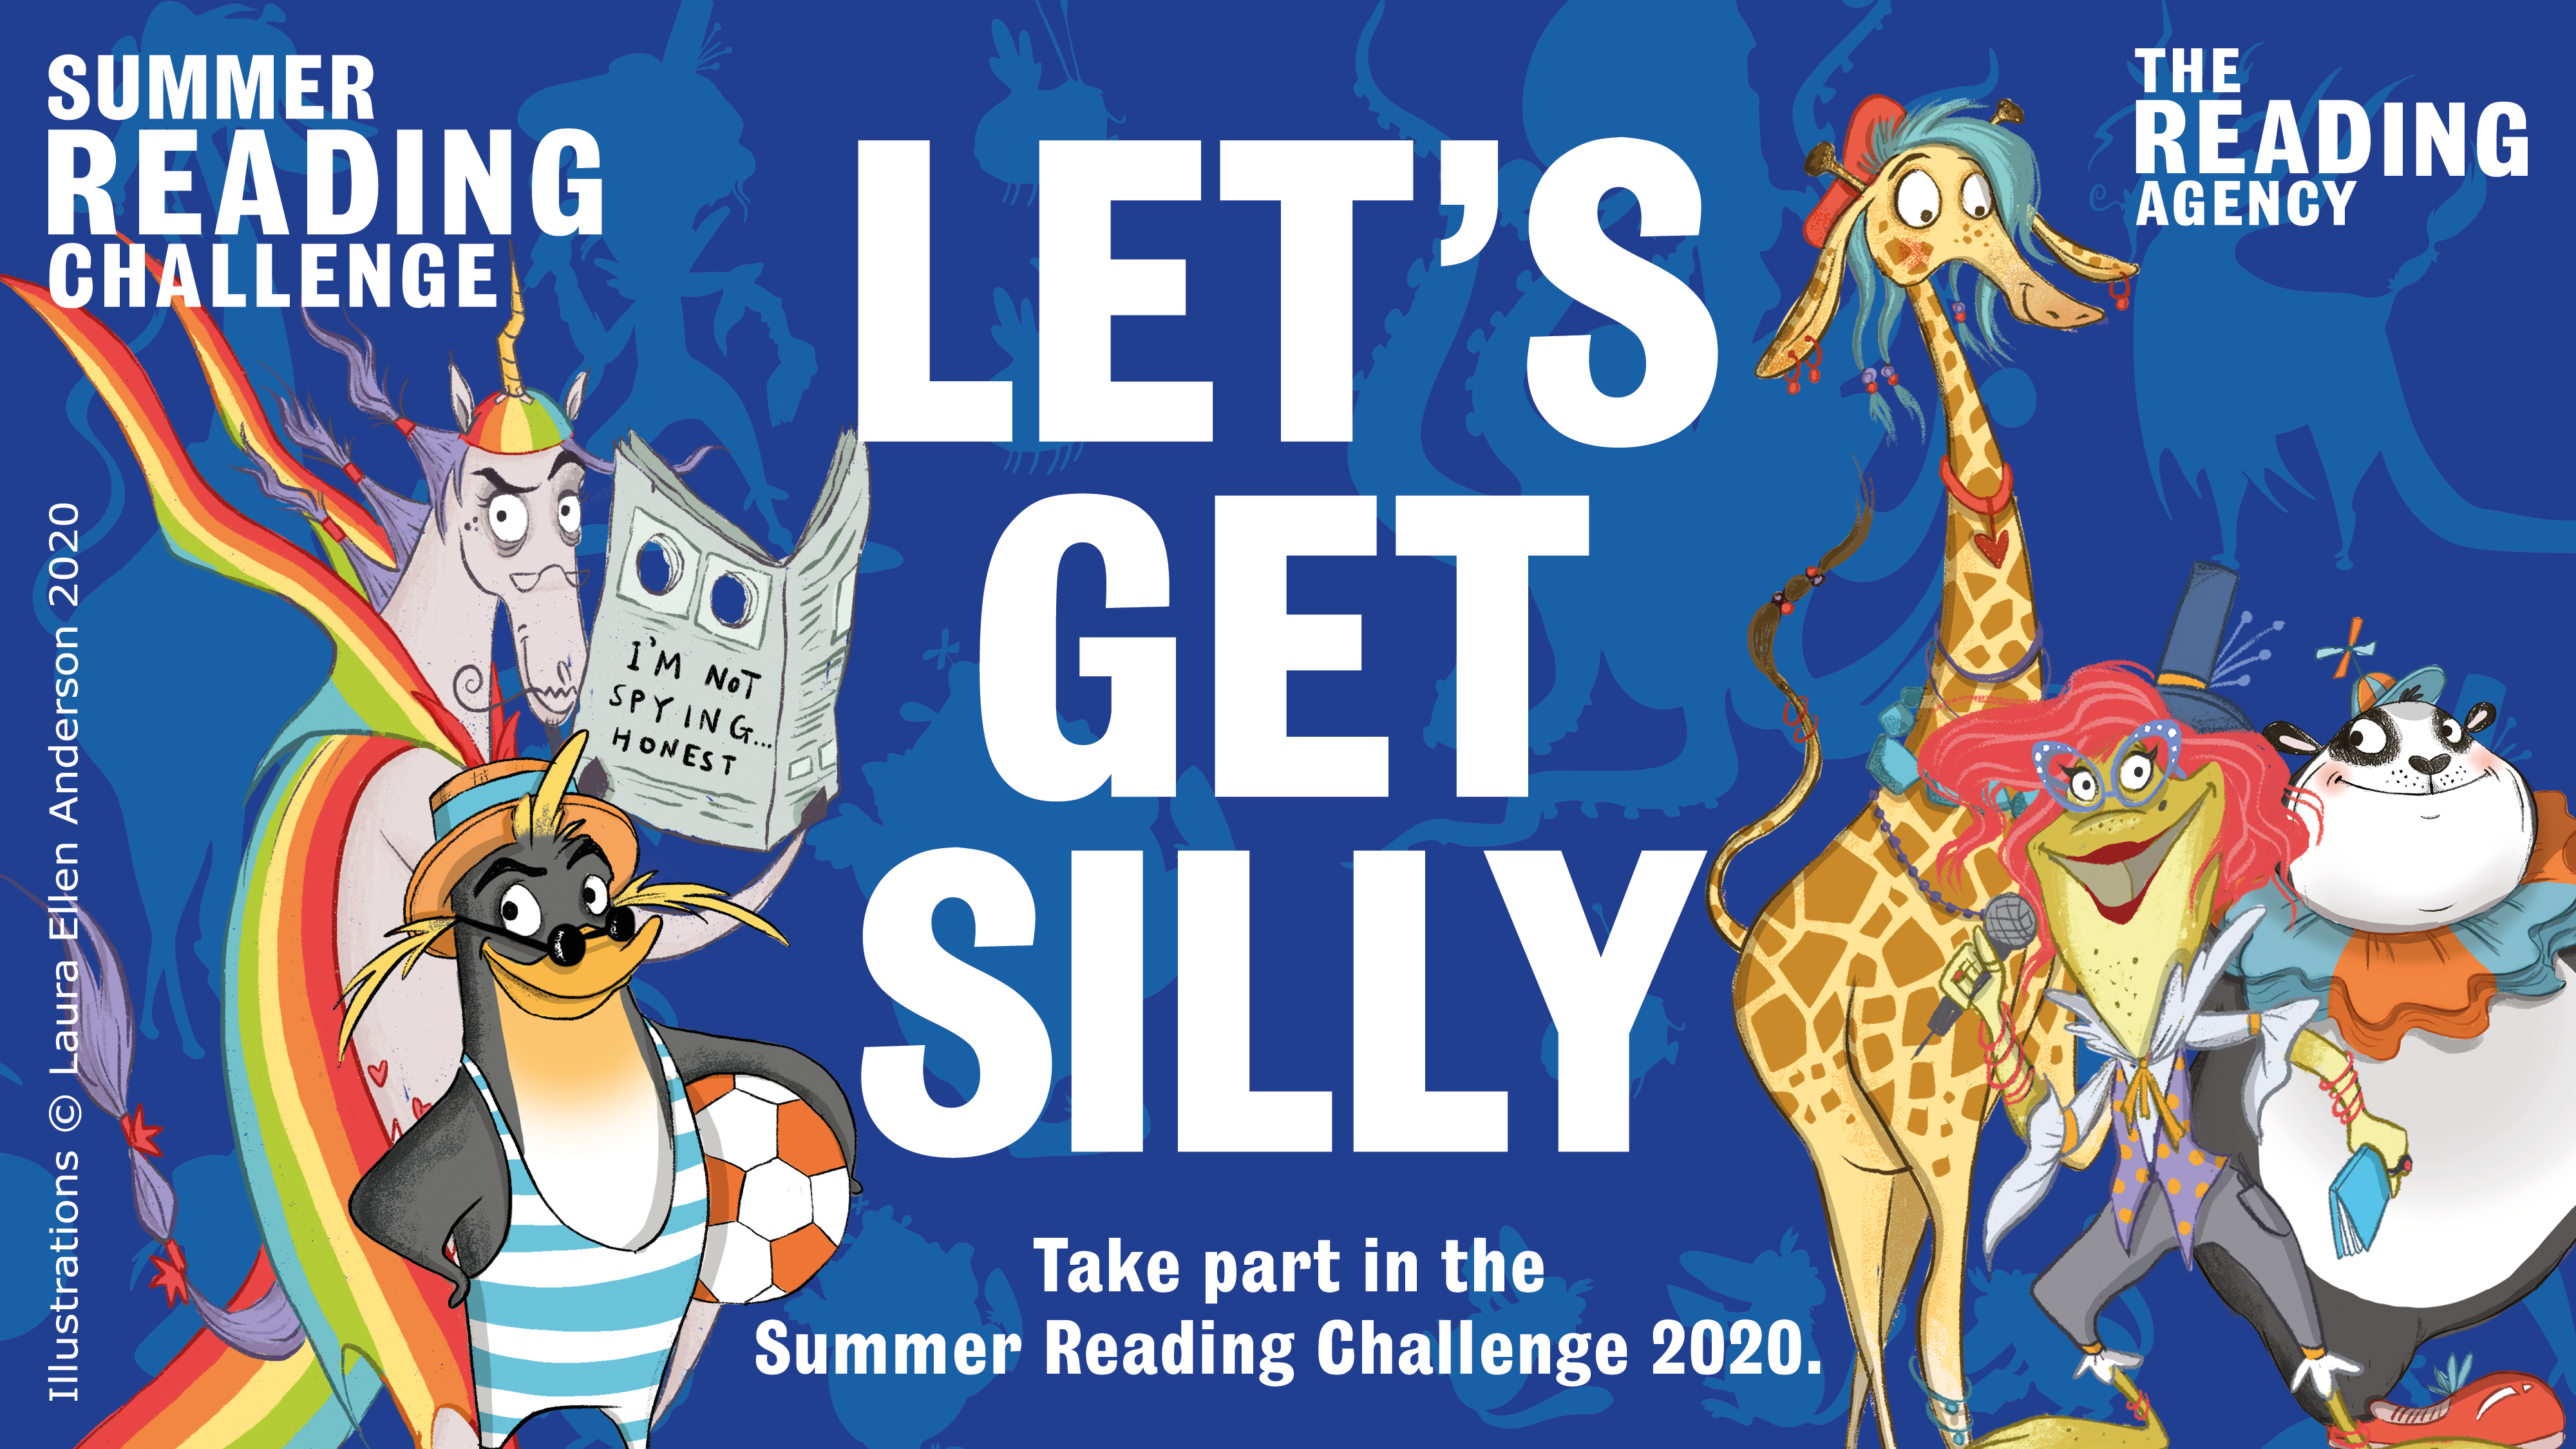 Join Beano's Summer Reading Challenge!